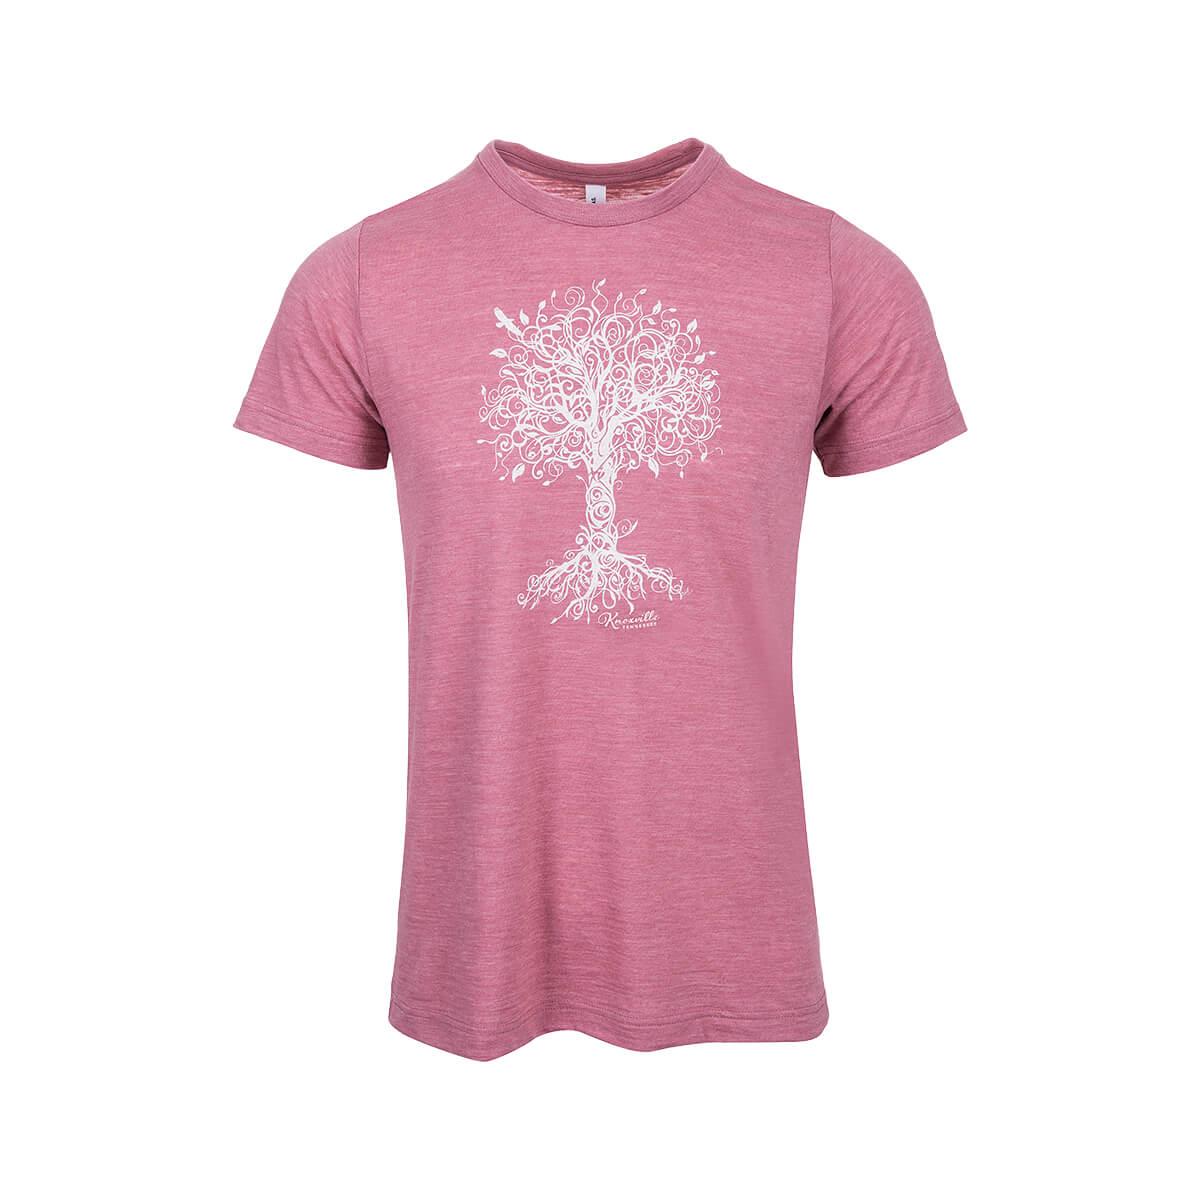  Knoxville Yoga Tree Short Sleeve T- Shirt